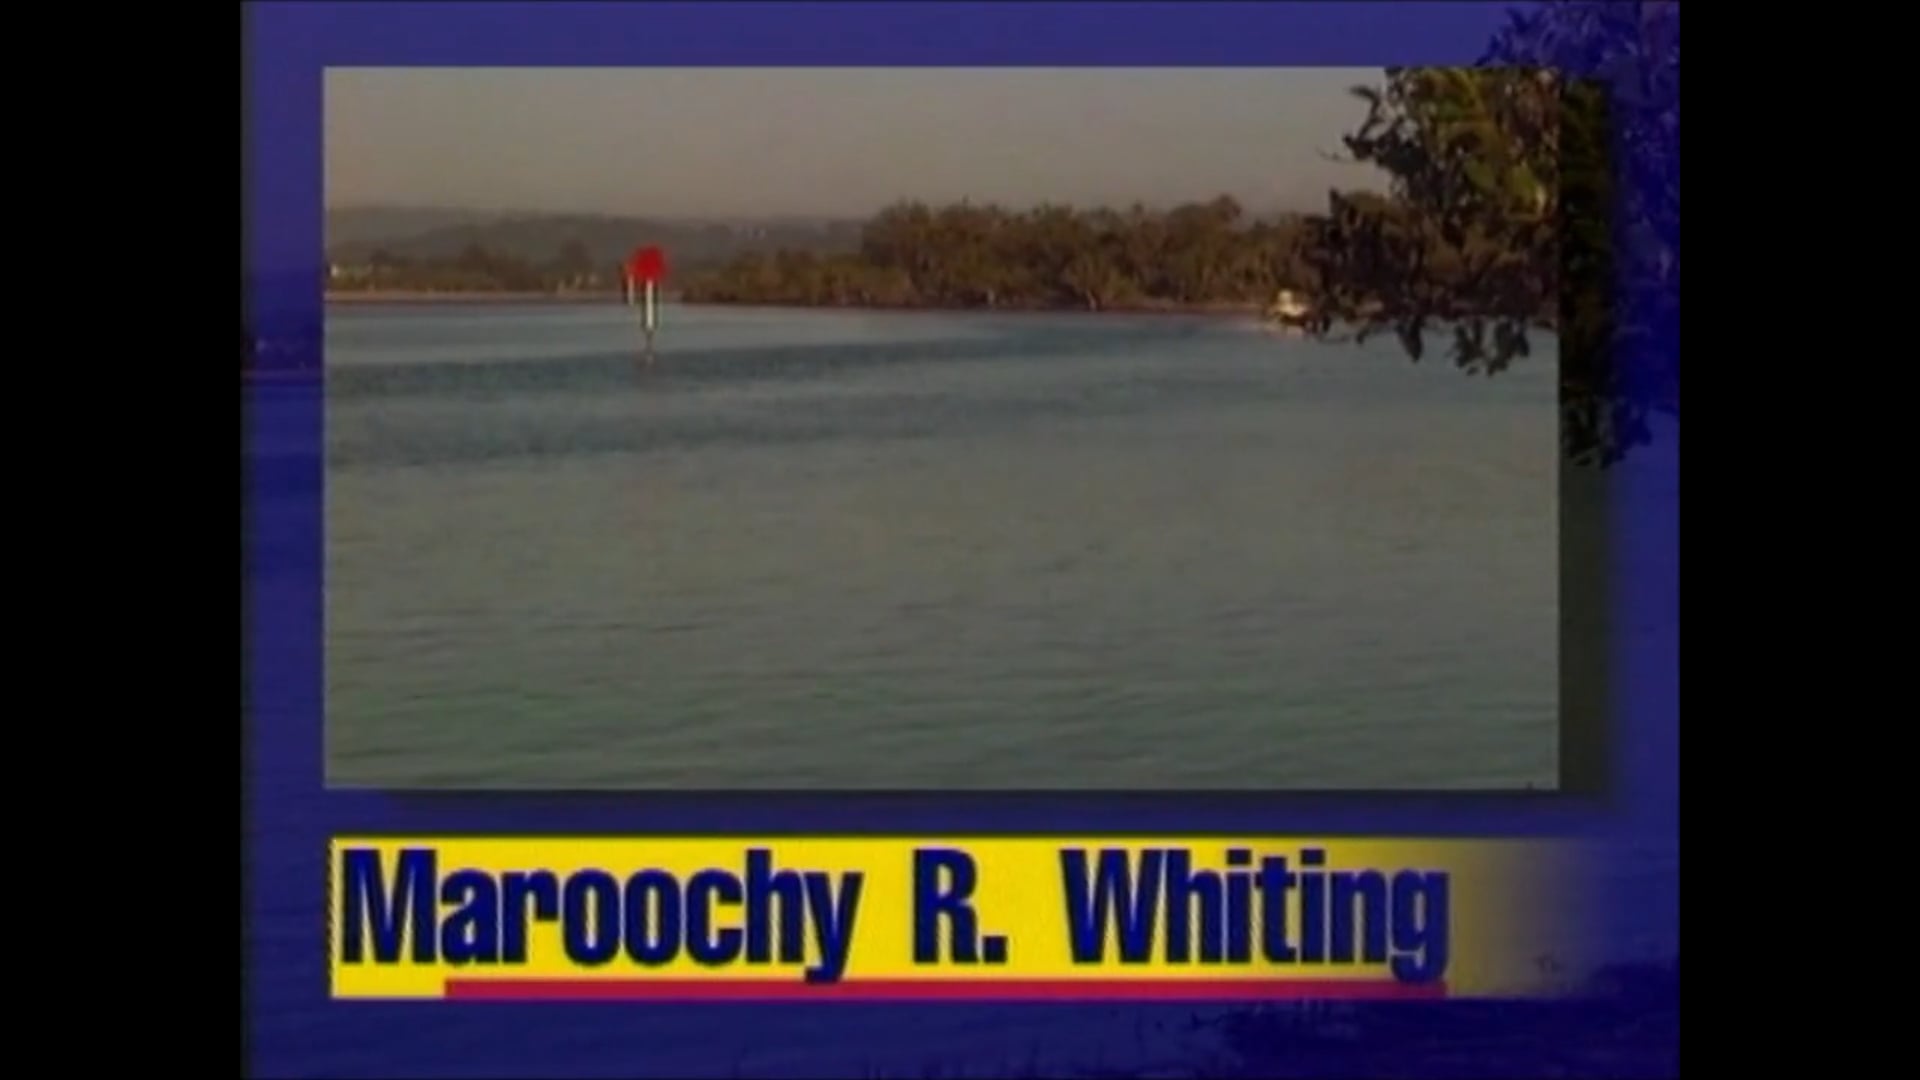 Maroochy River Whiting – Martin Cowling